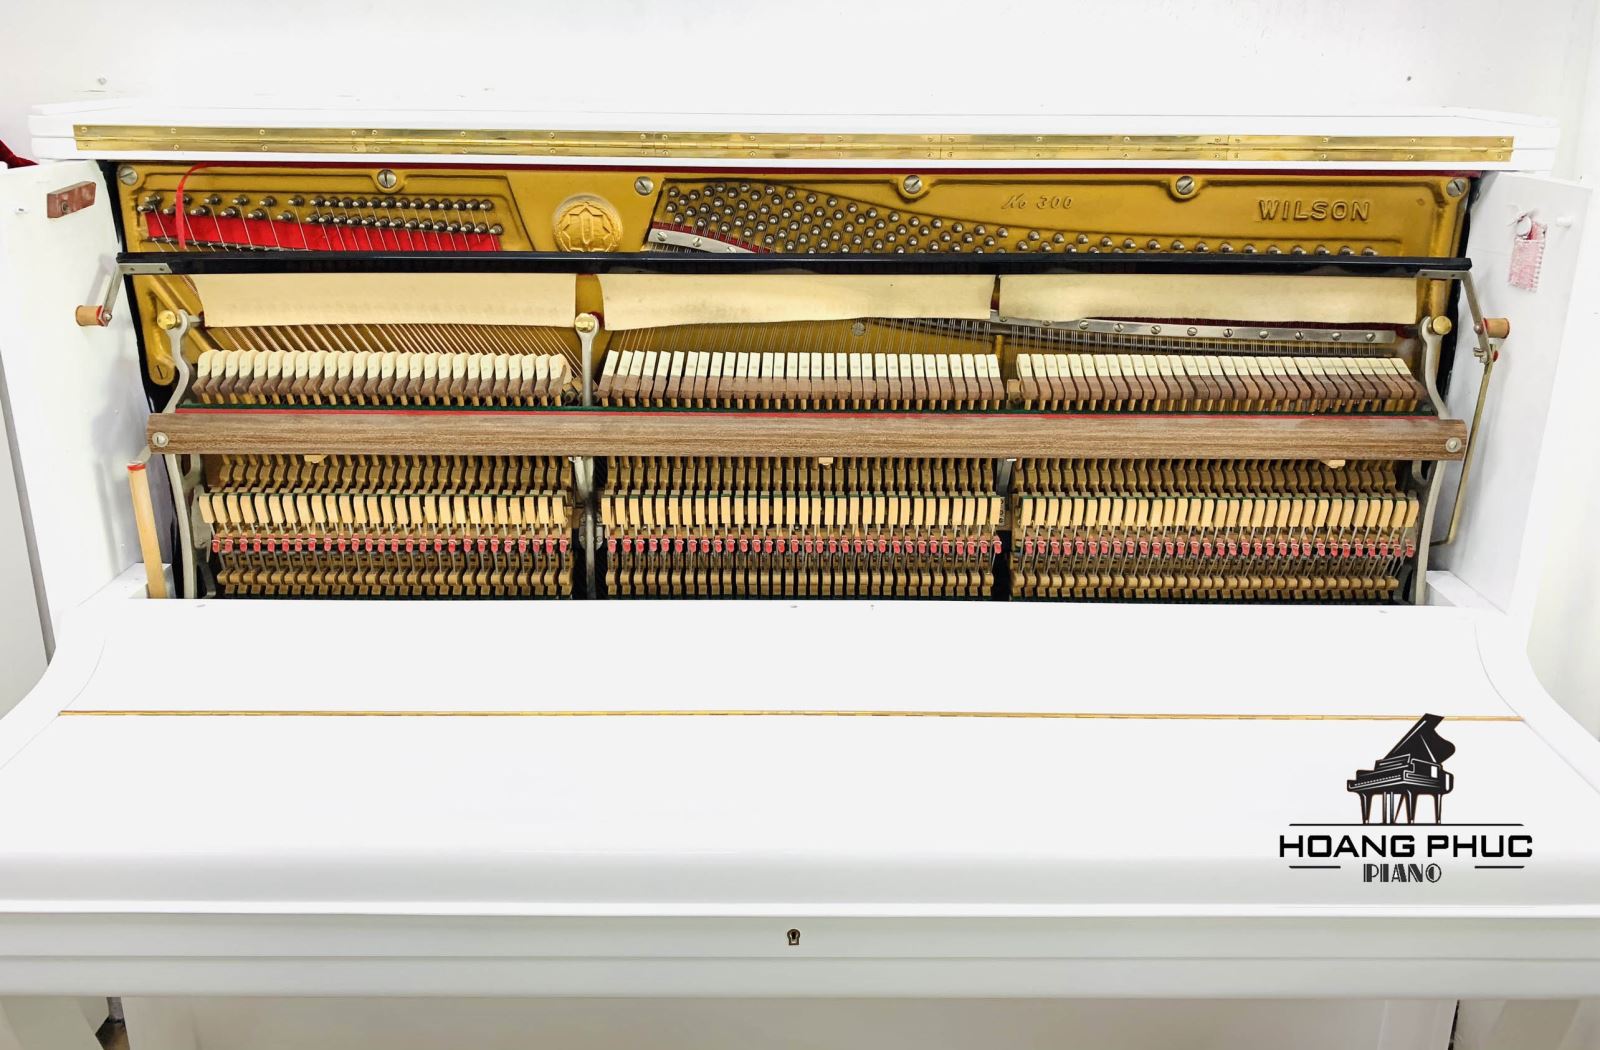 PIANO CƠ WILSON No.300